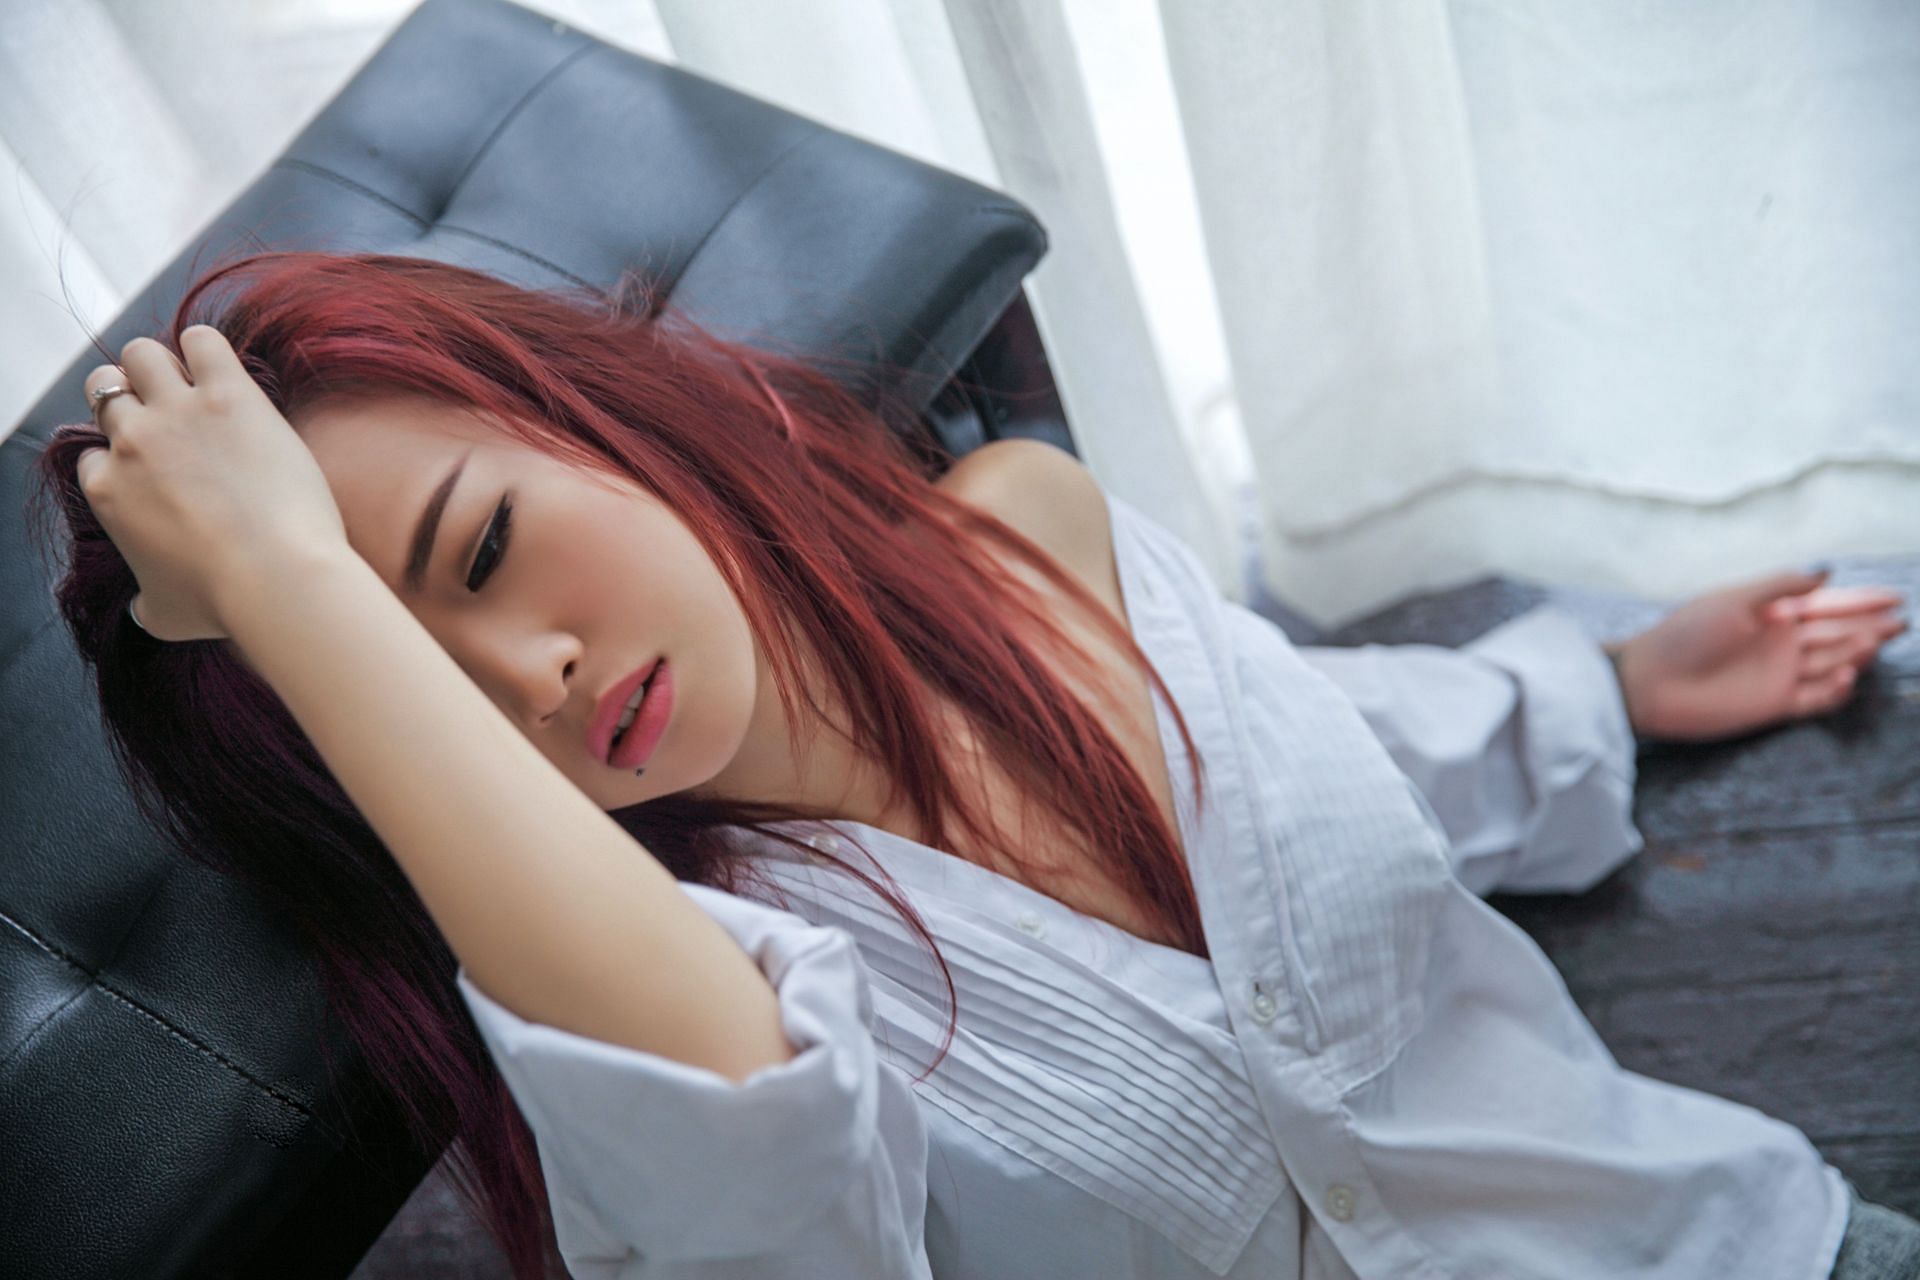 Proper sleep can help with hangover headaches. (Image via Pexels/ Greecechina News)